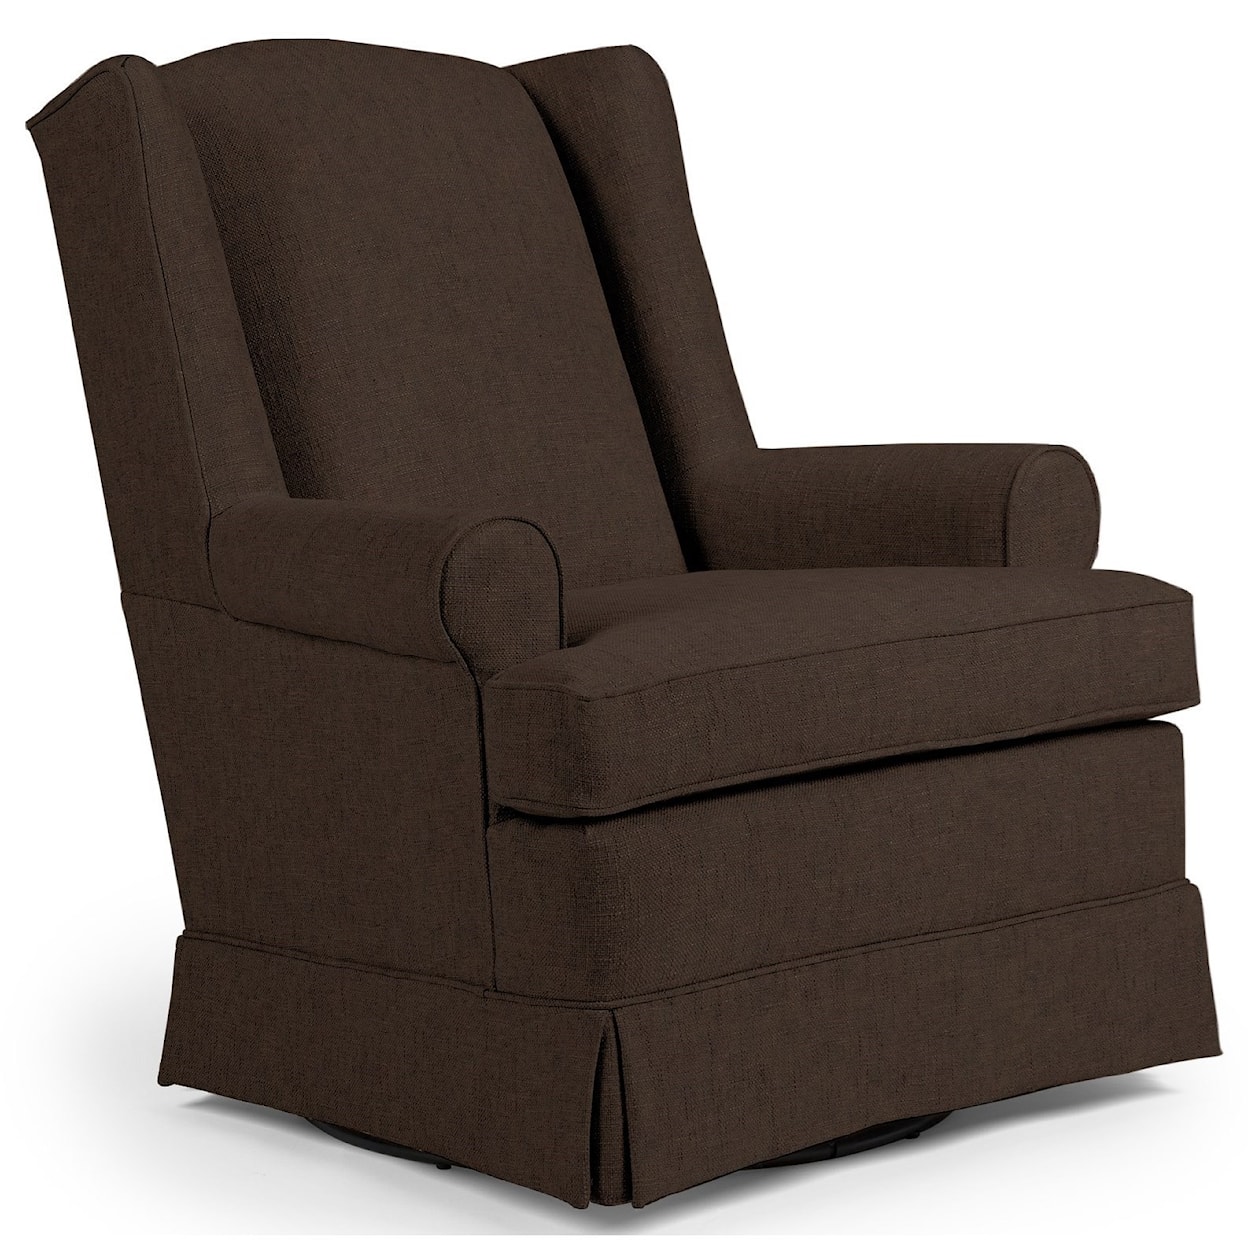 Best Home Furnishings Swivel Glide Chairs Roni Swivel Glider Chair